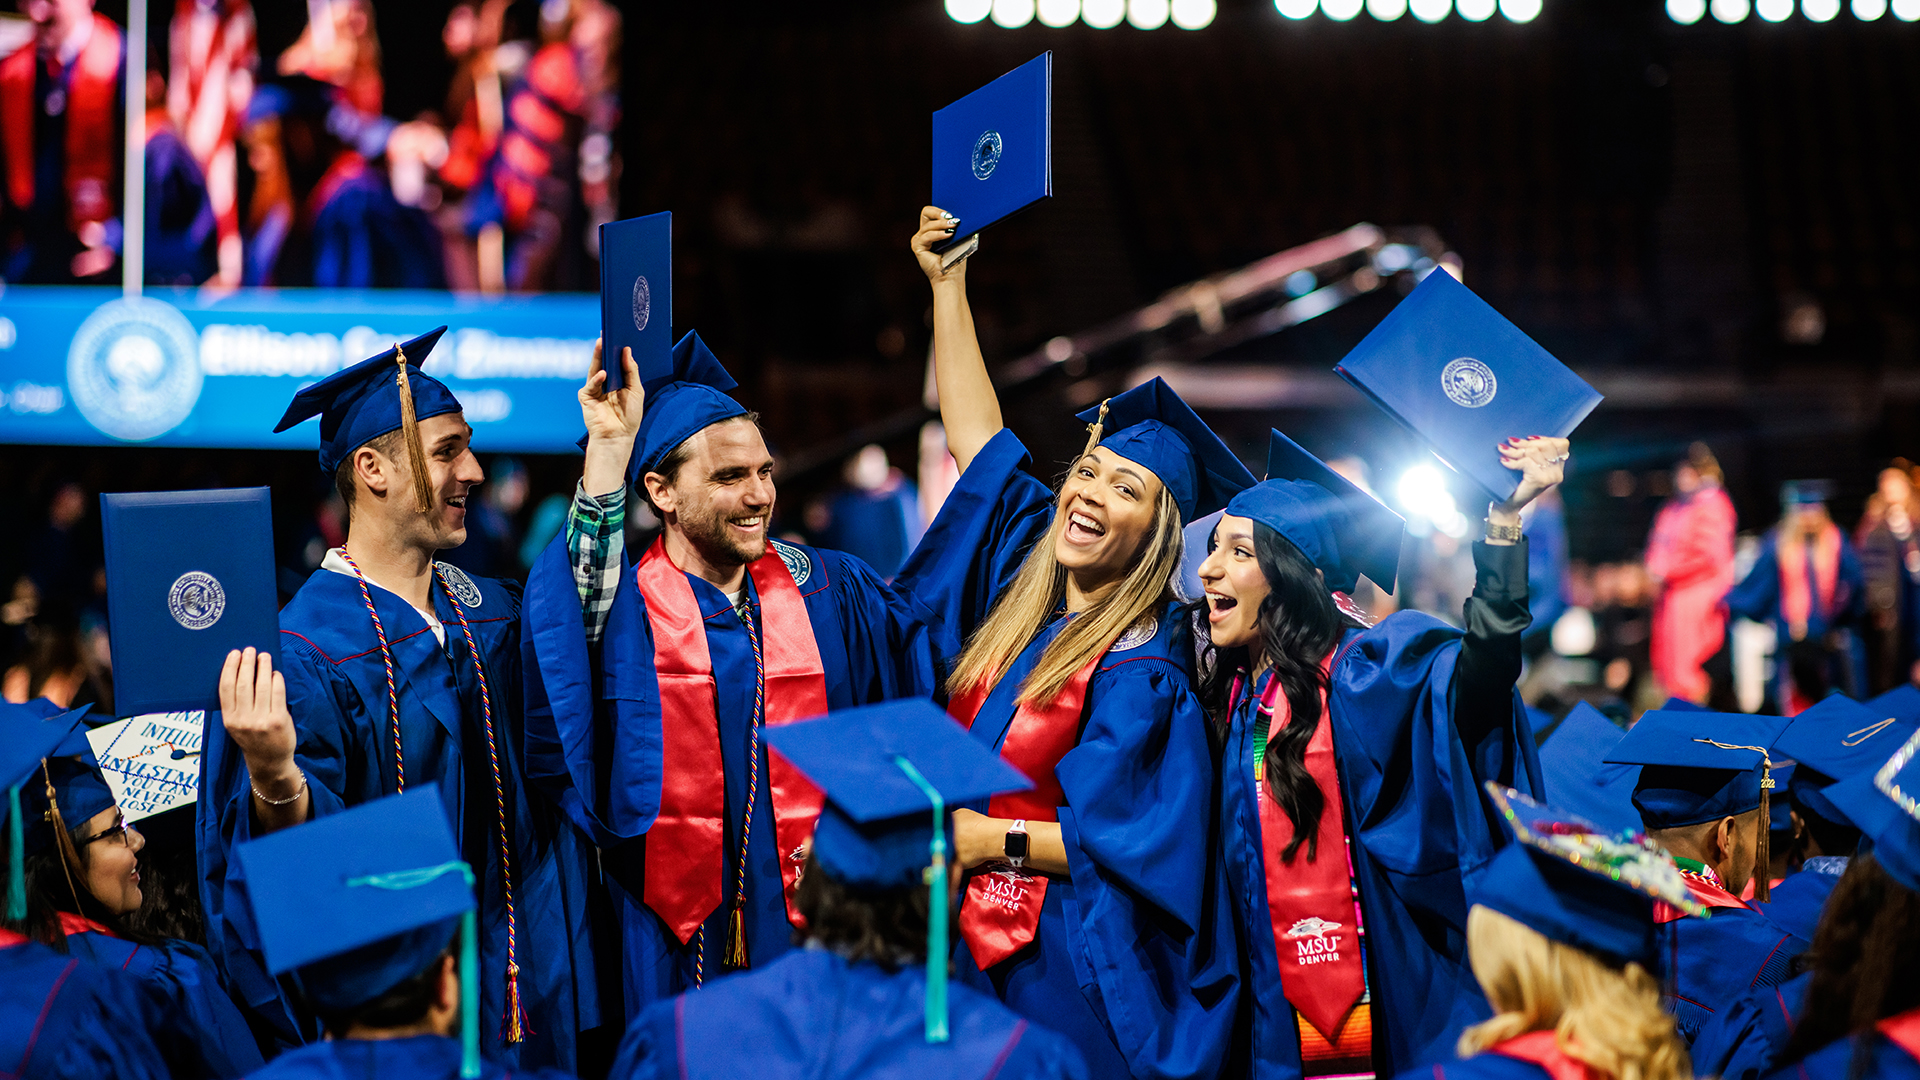 PHOTOS: Graduates take the stage at Denver Coliseum